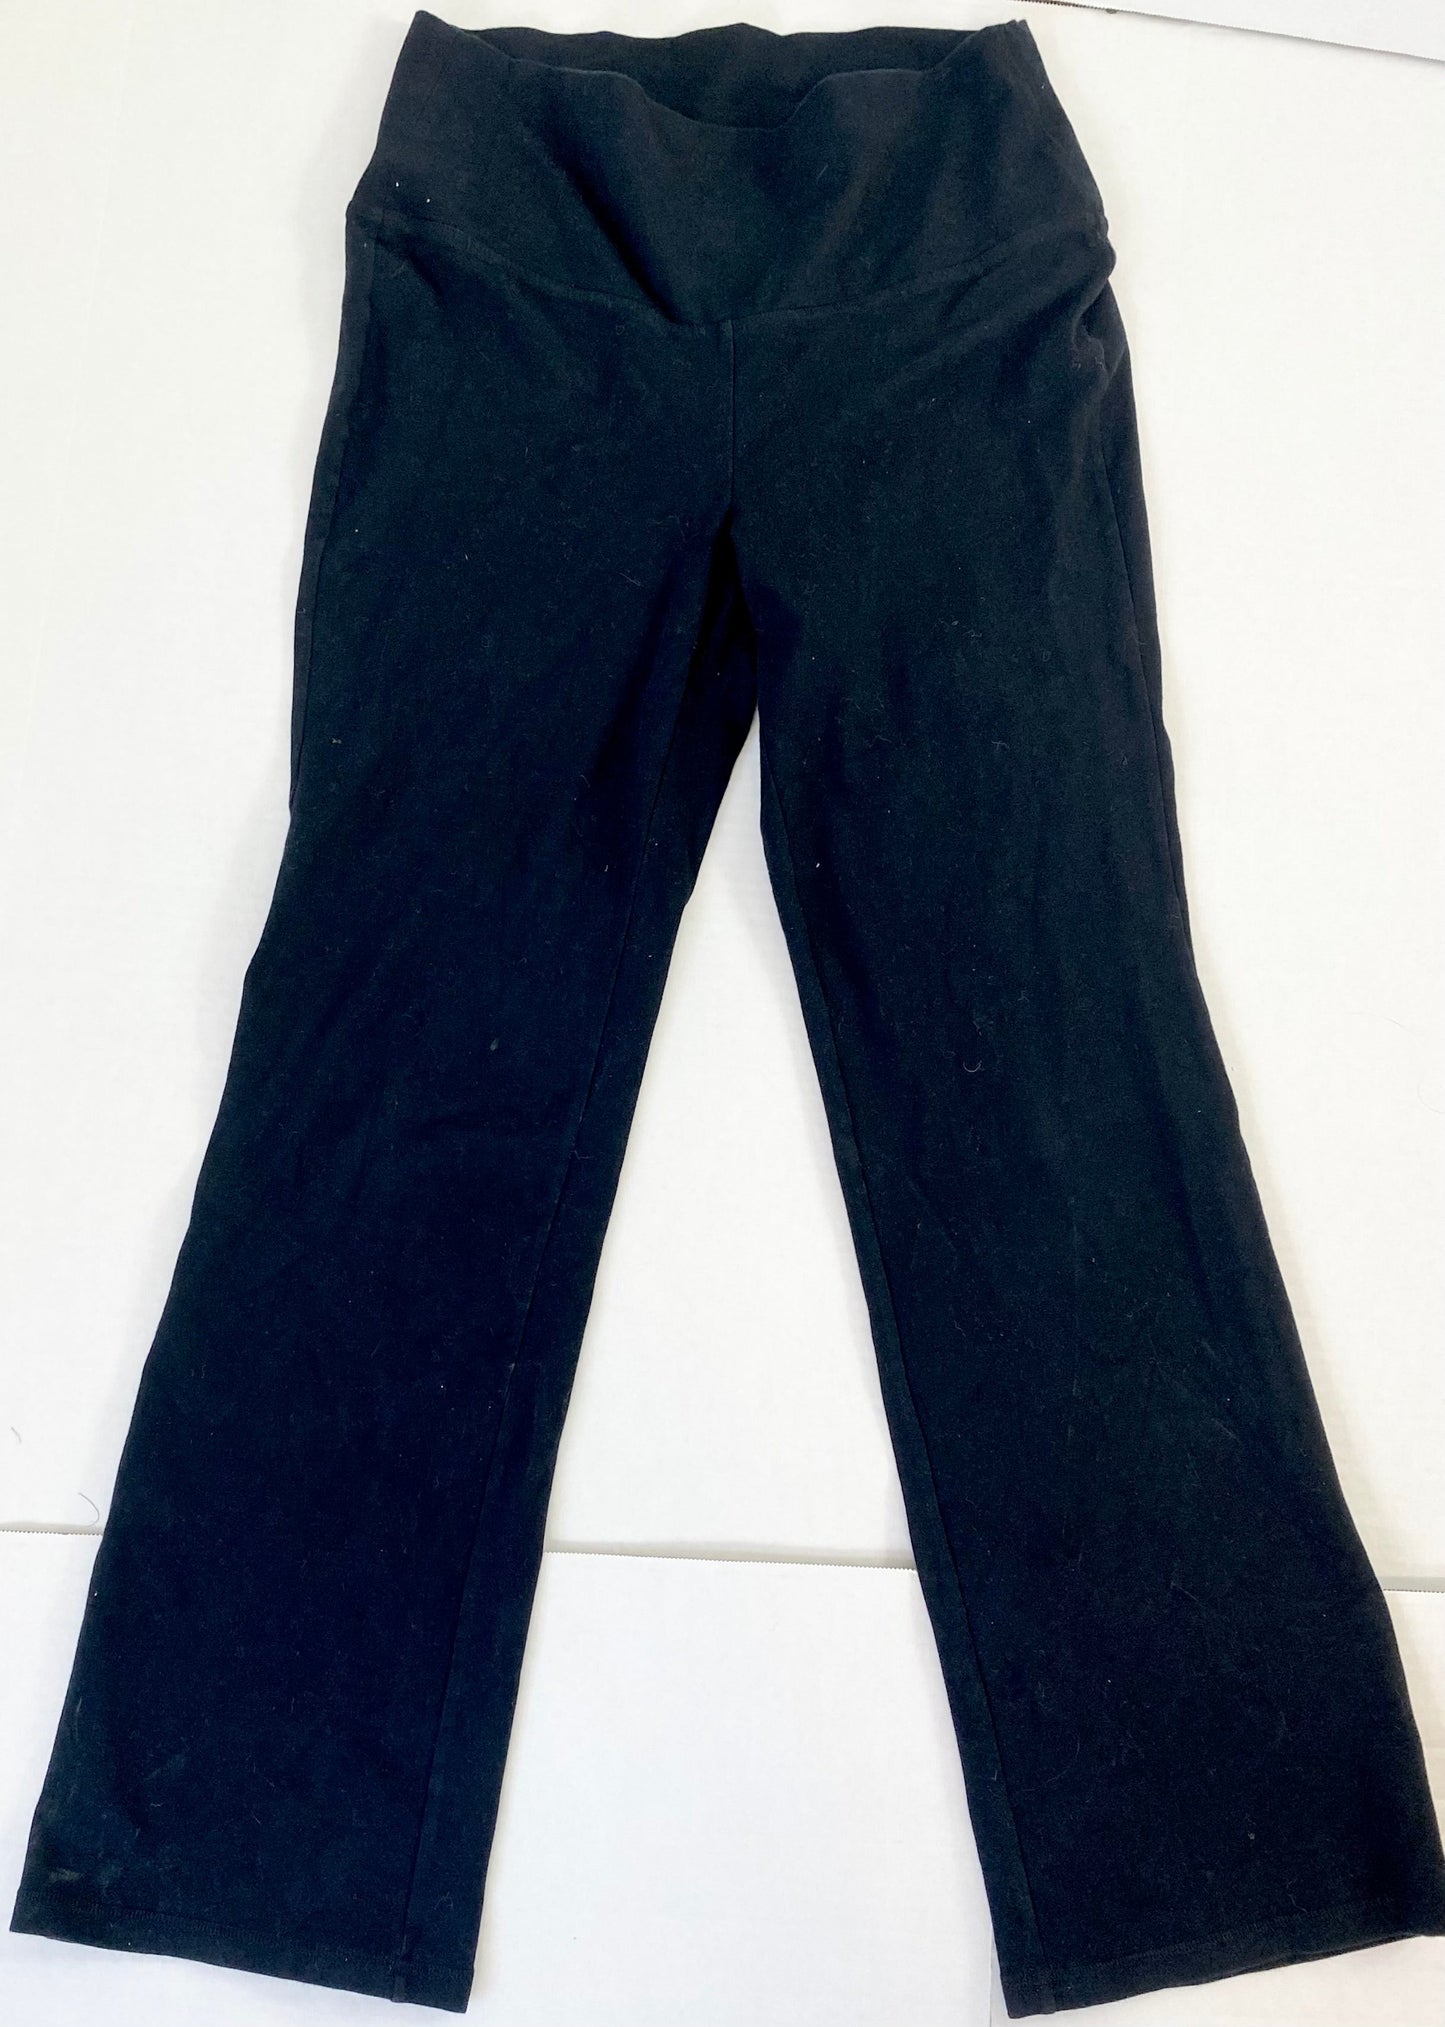 Medium Maternity Gap shirt and Old Navy black active stretch bootcut pants-smooth full panel